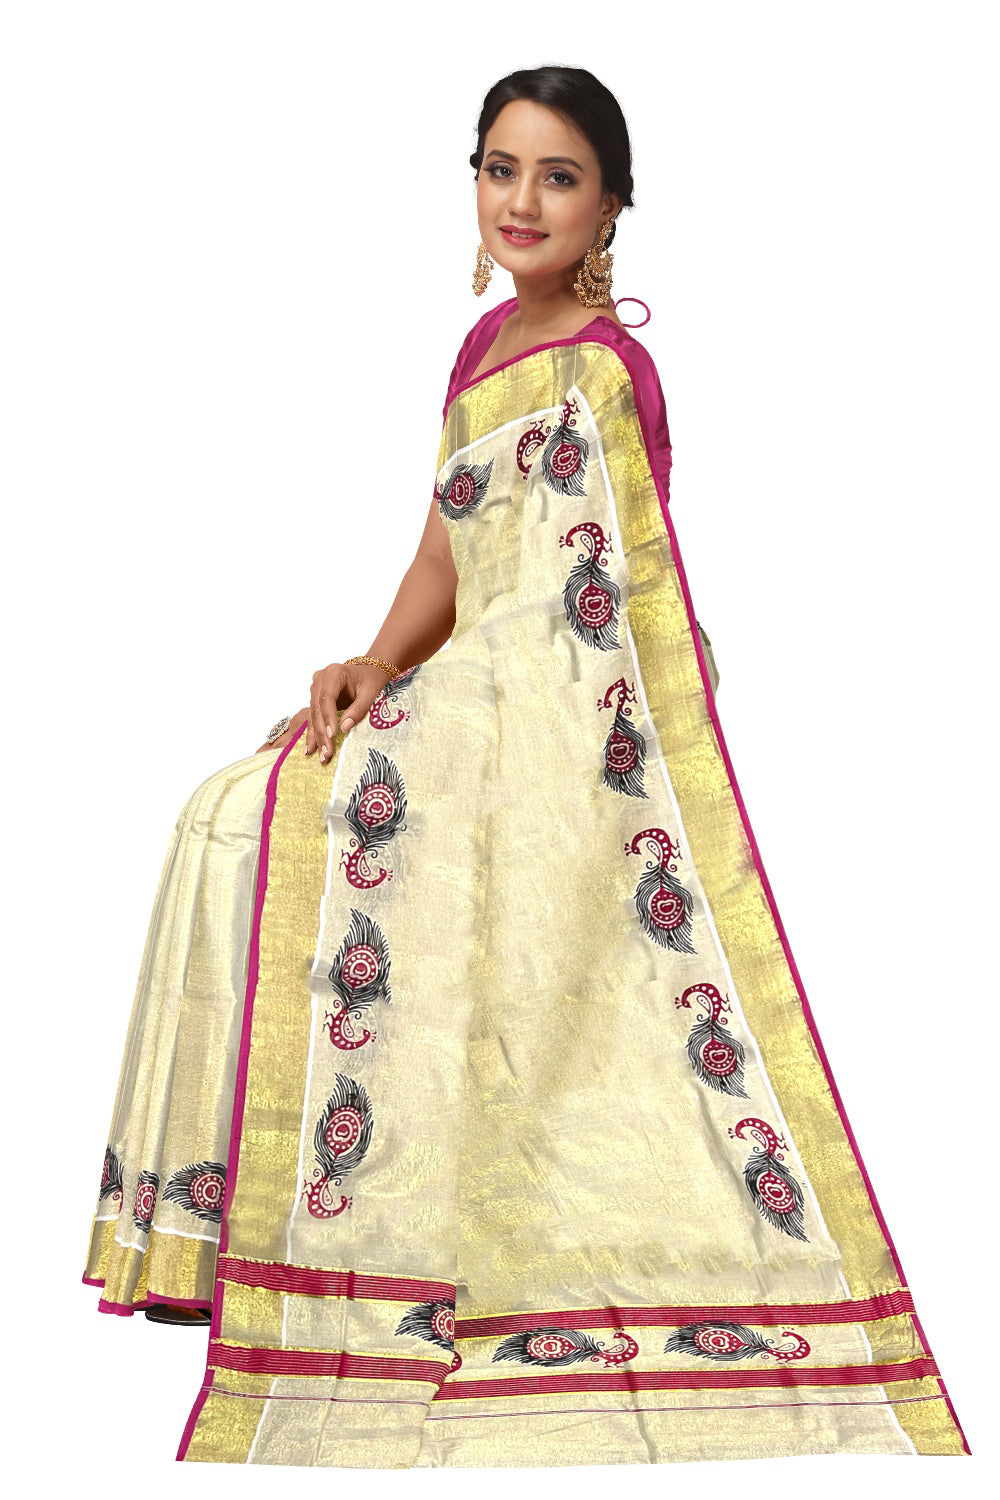 Kerala Tissue Kasavu Saree with Pink and Black Peacock Block Printed Design